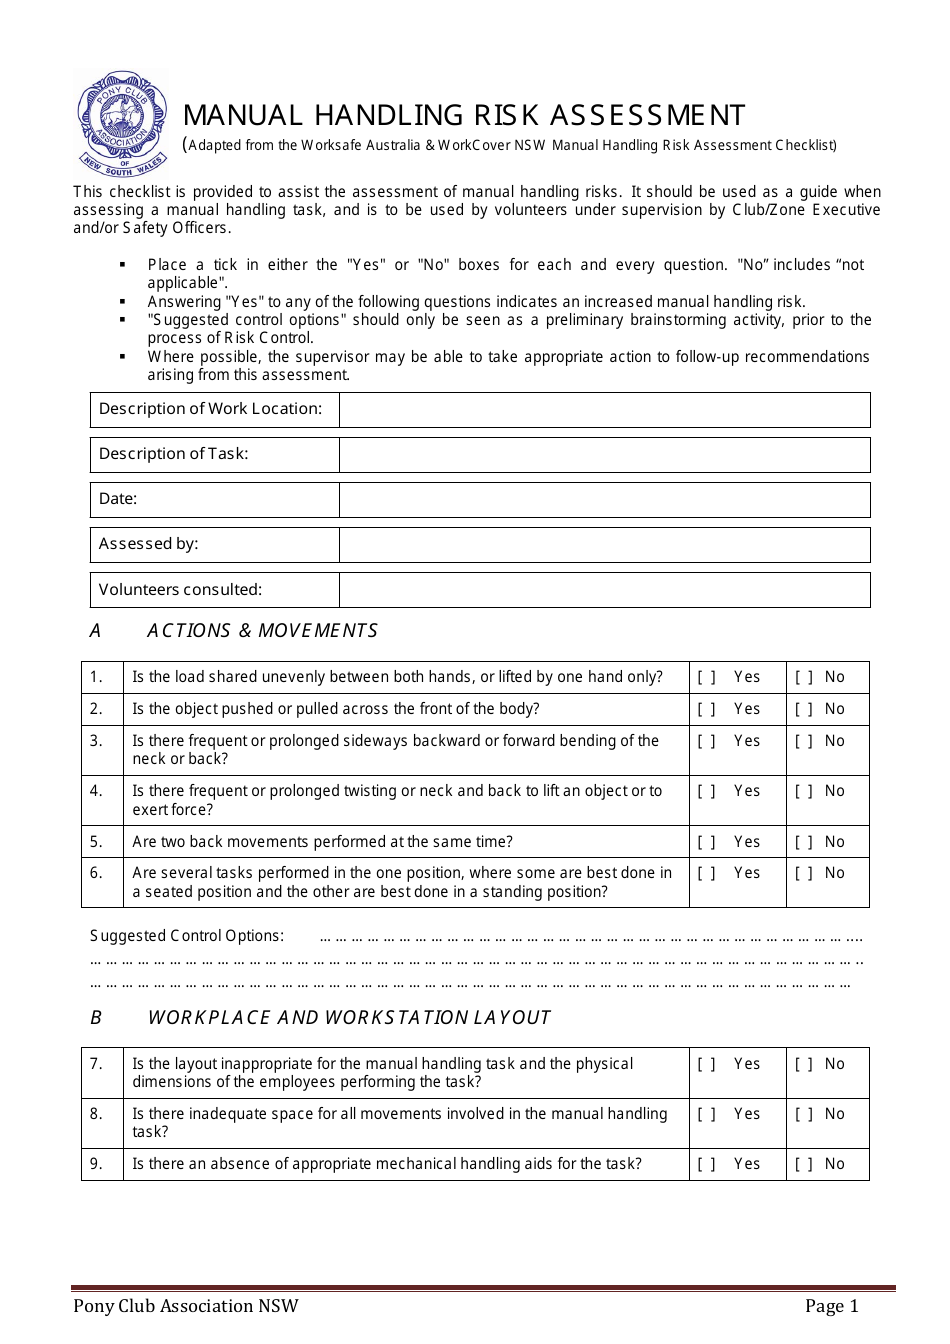 Manual Handling Risk Assessment Checklist Template - Pony Club Association NSW